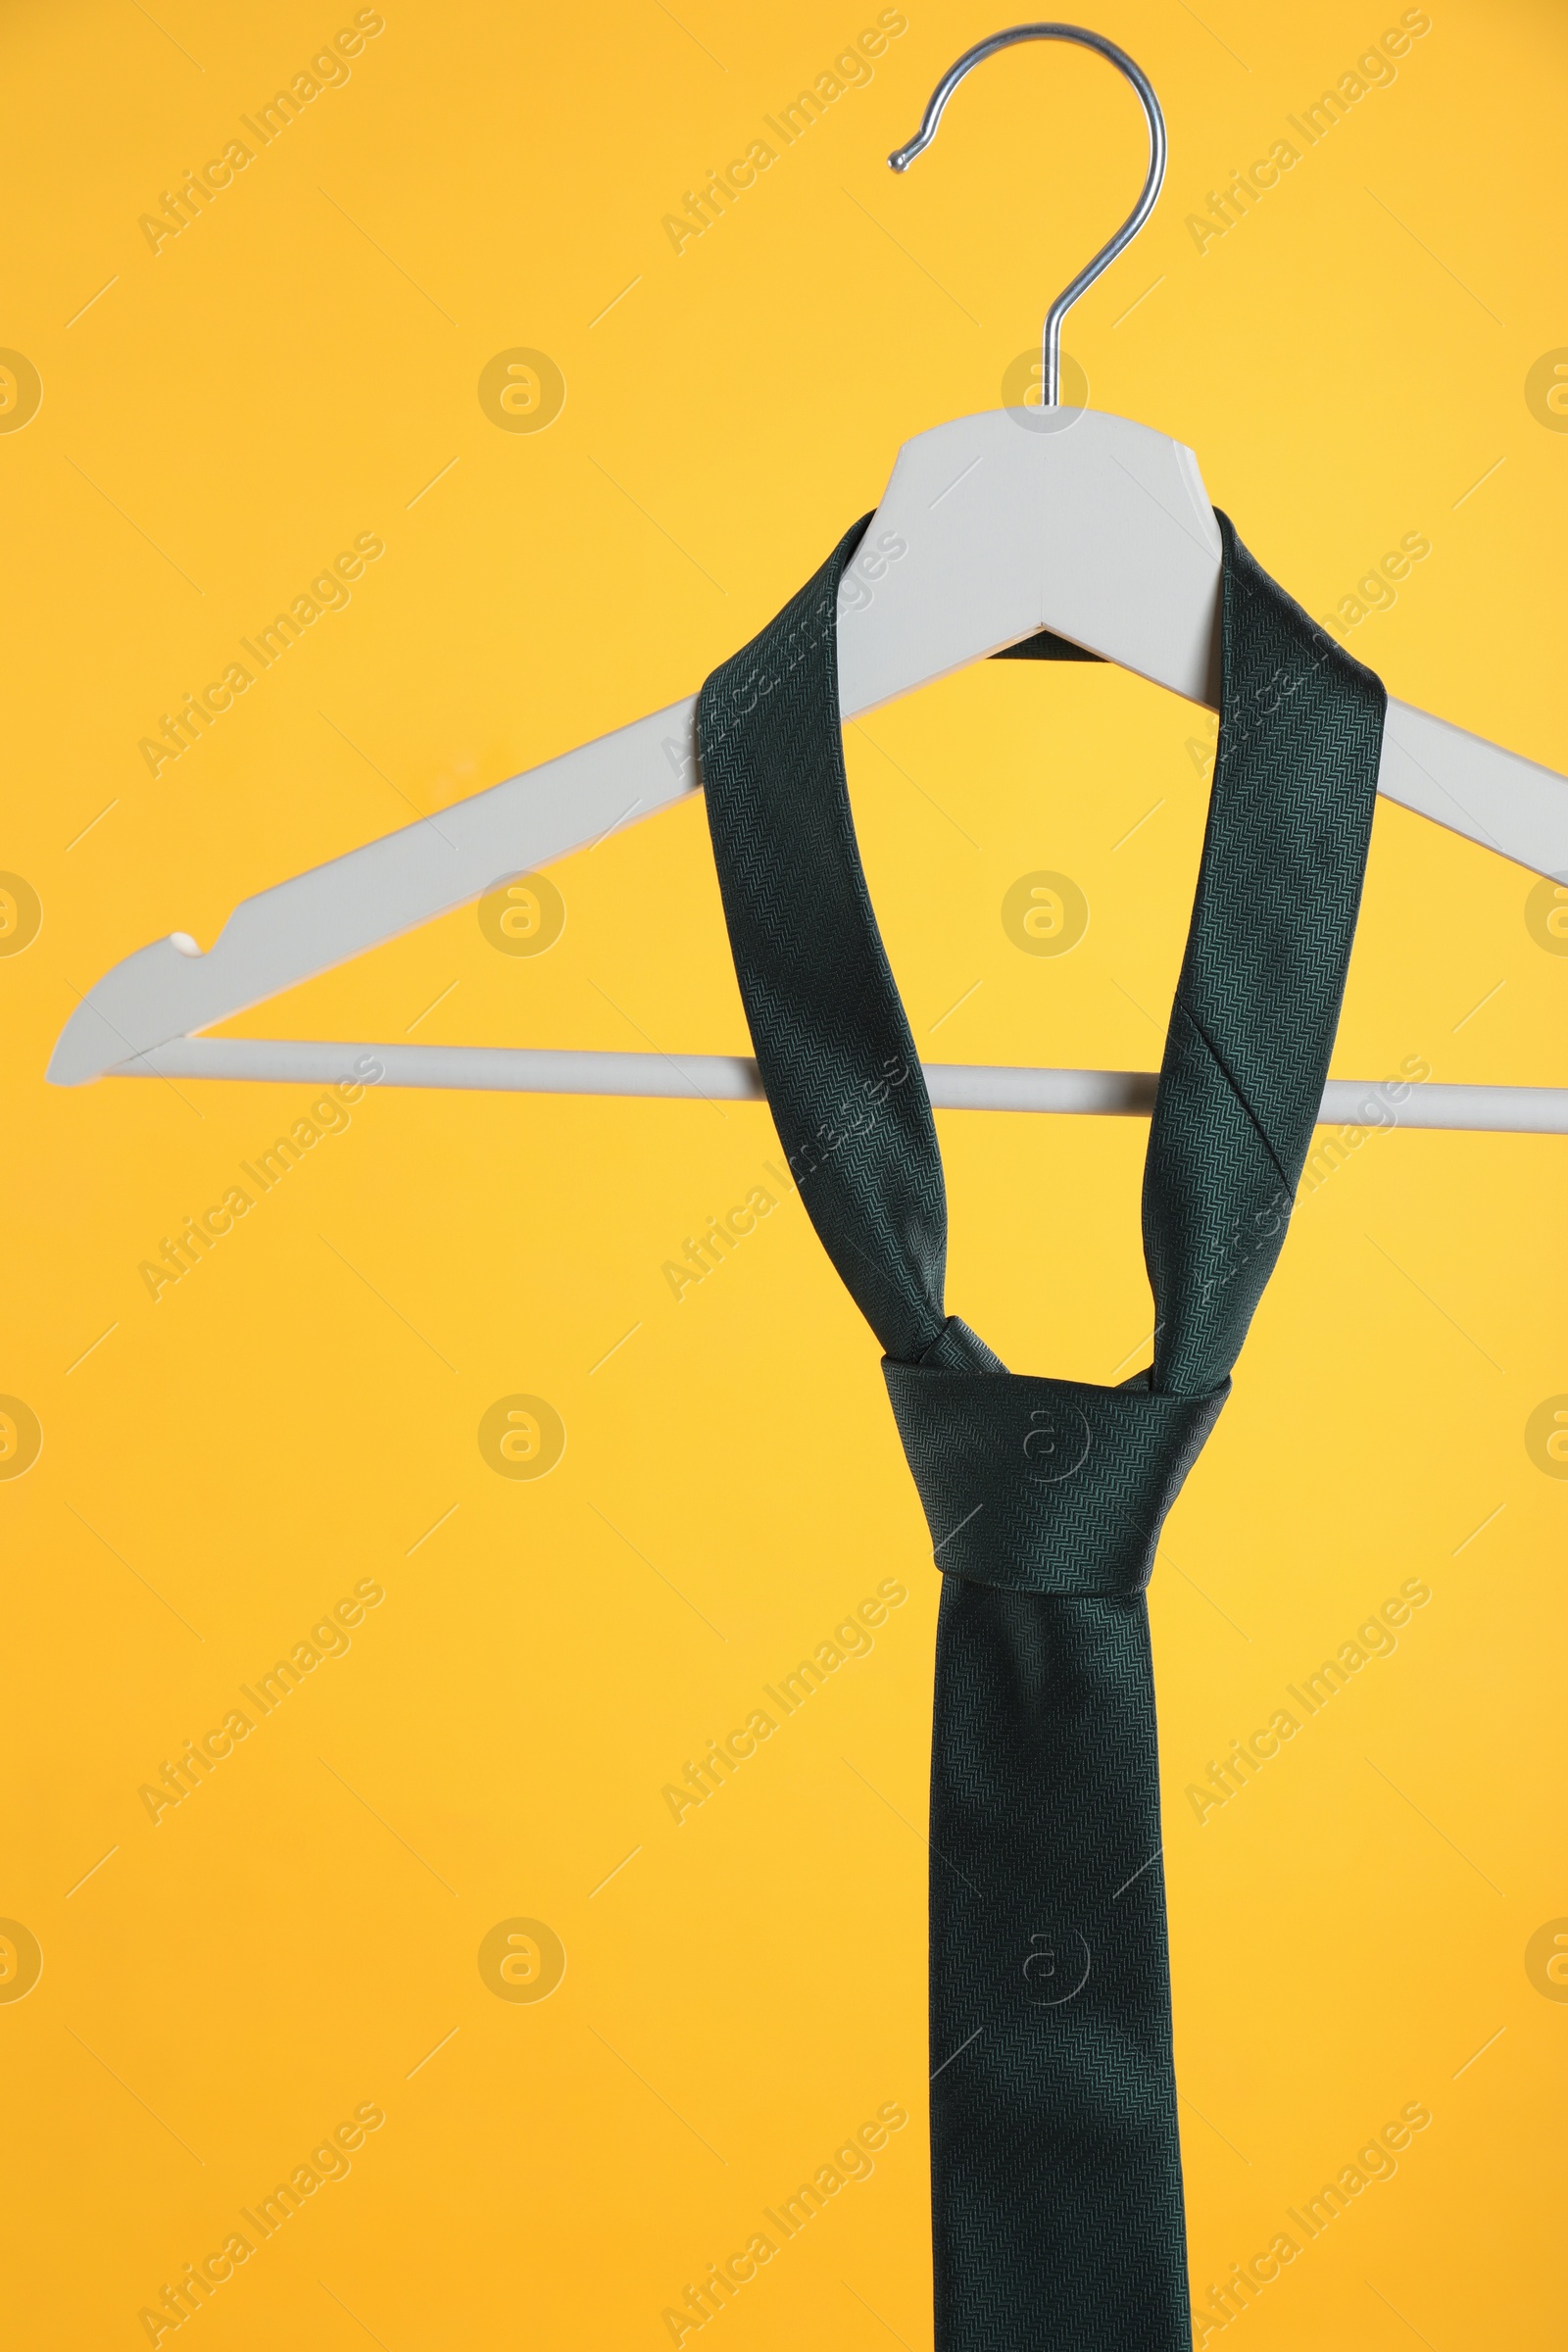 Photo of Hanger with black tie against orange background